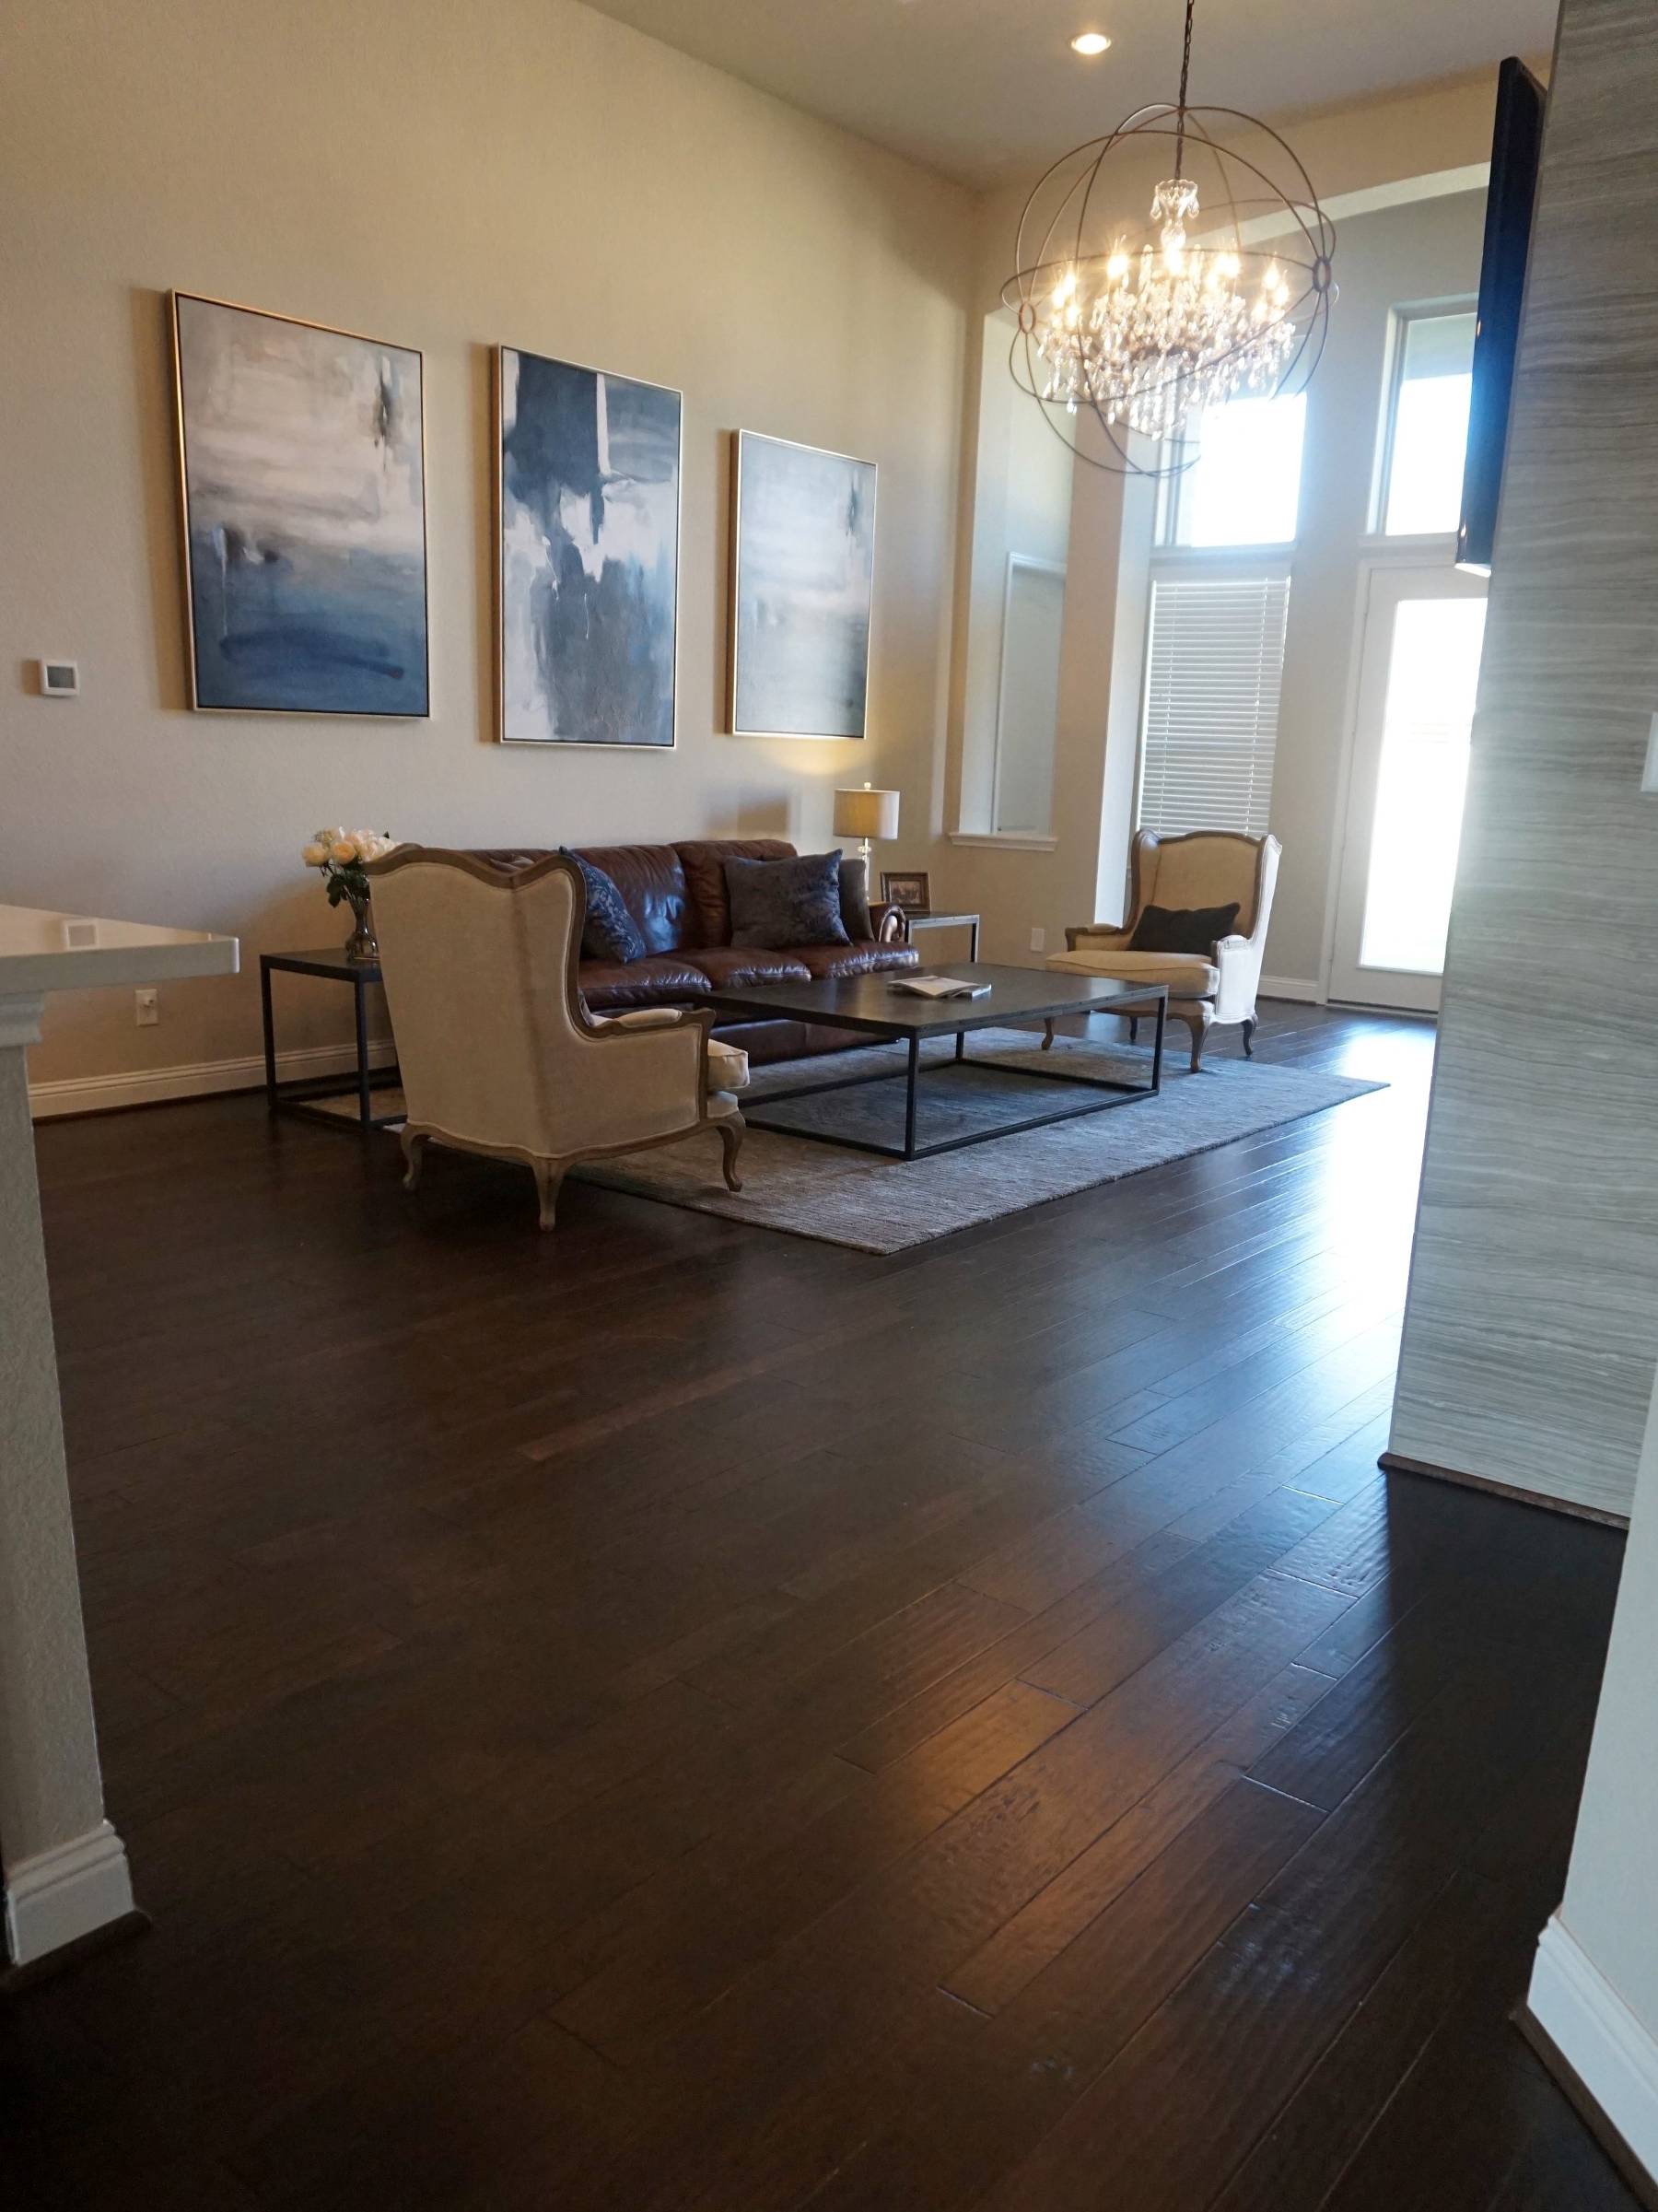 A living room scene with dark hardwood flooring.